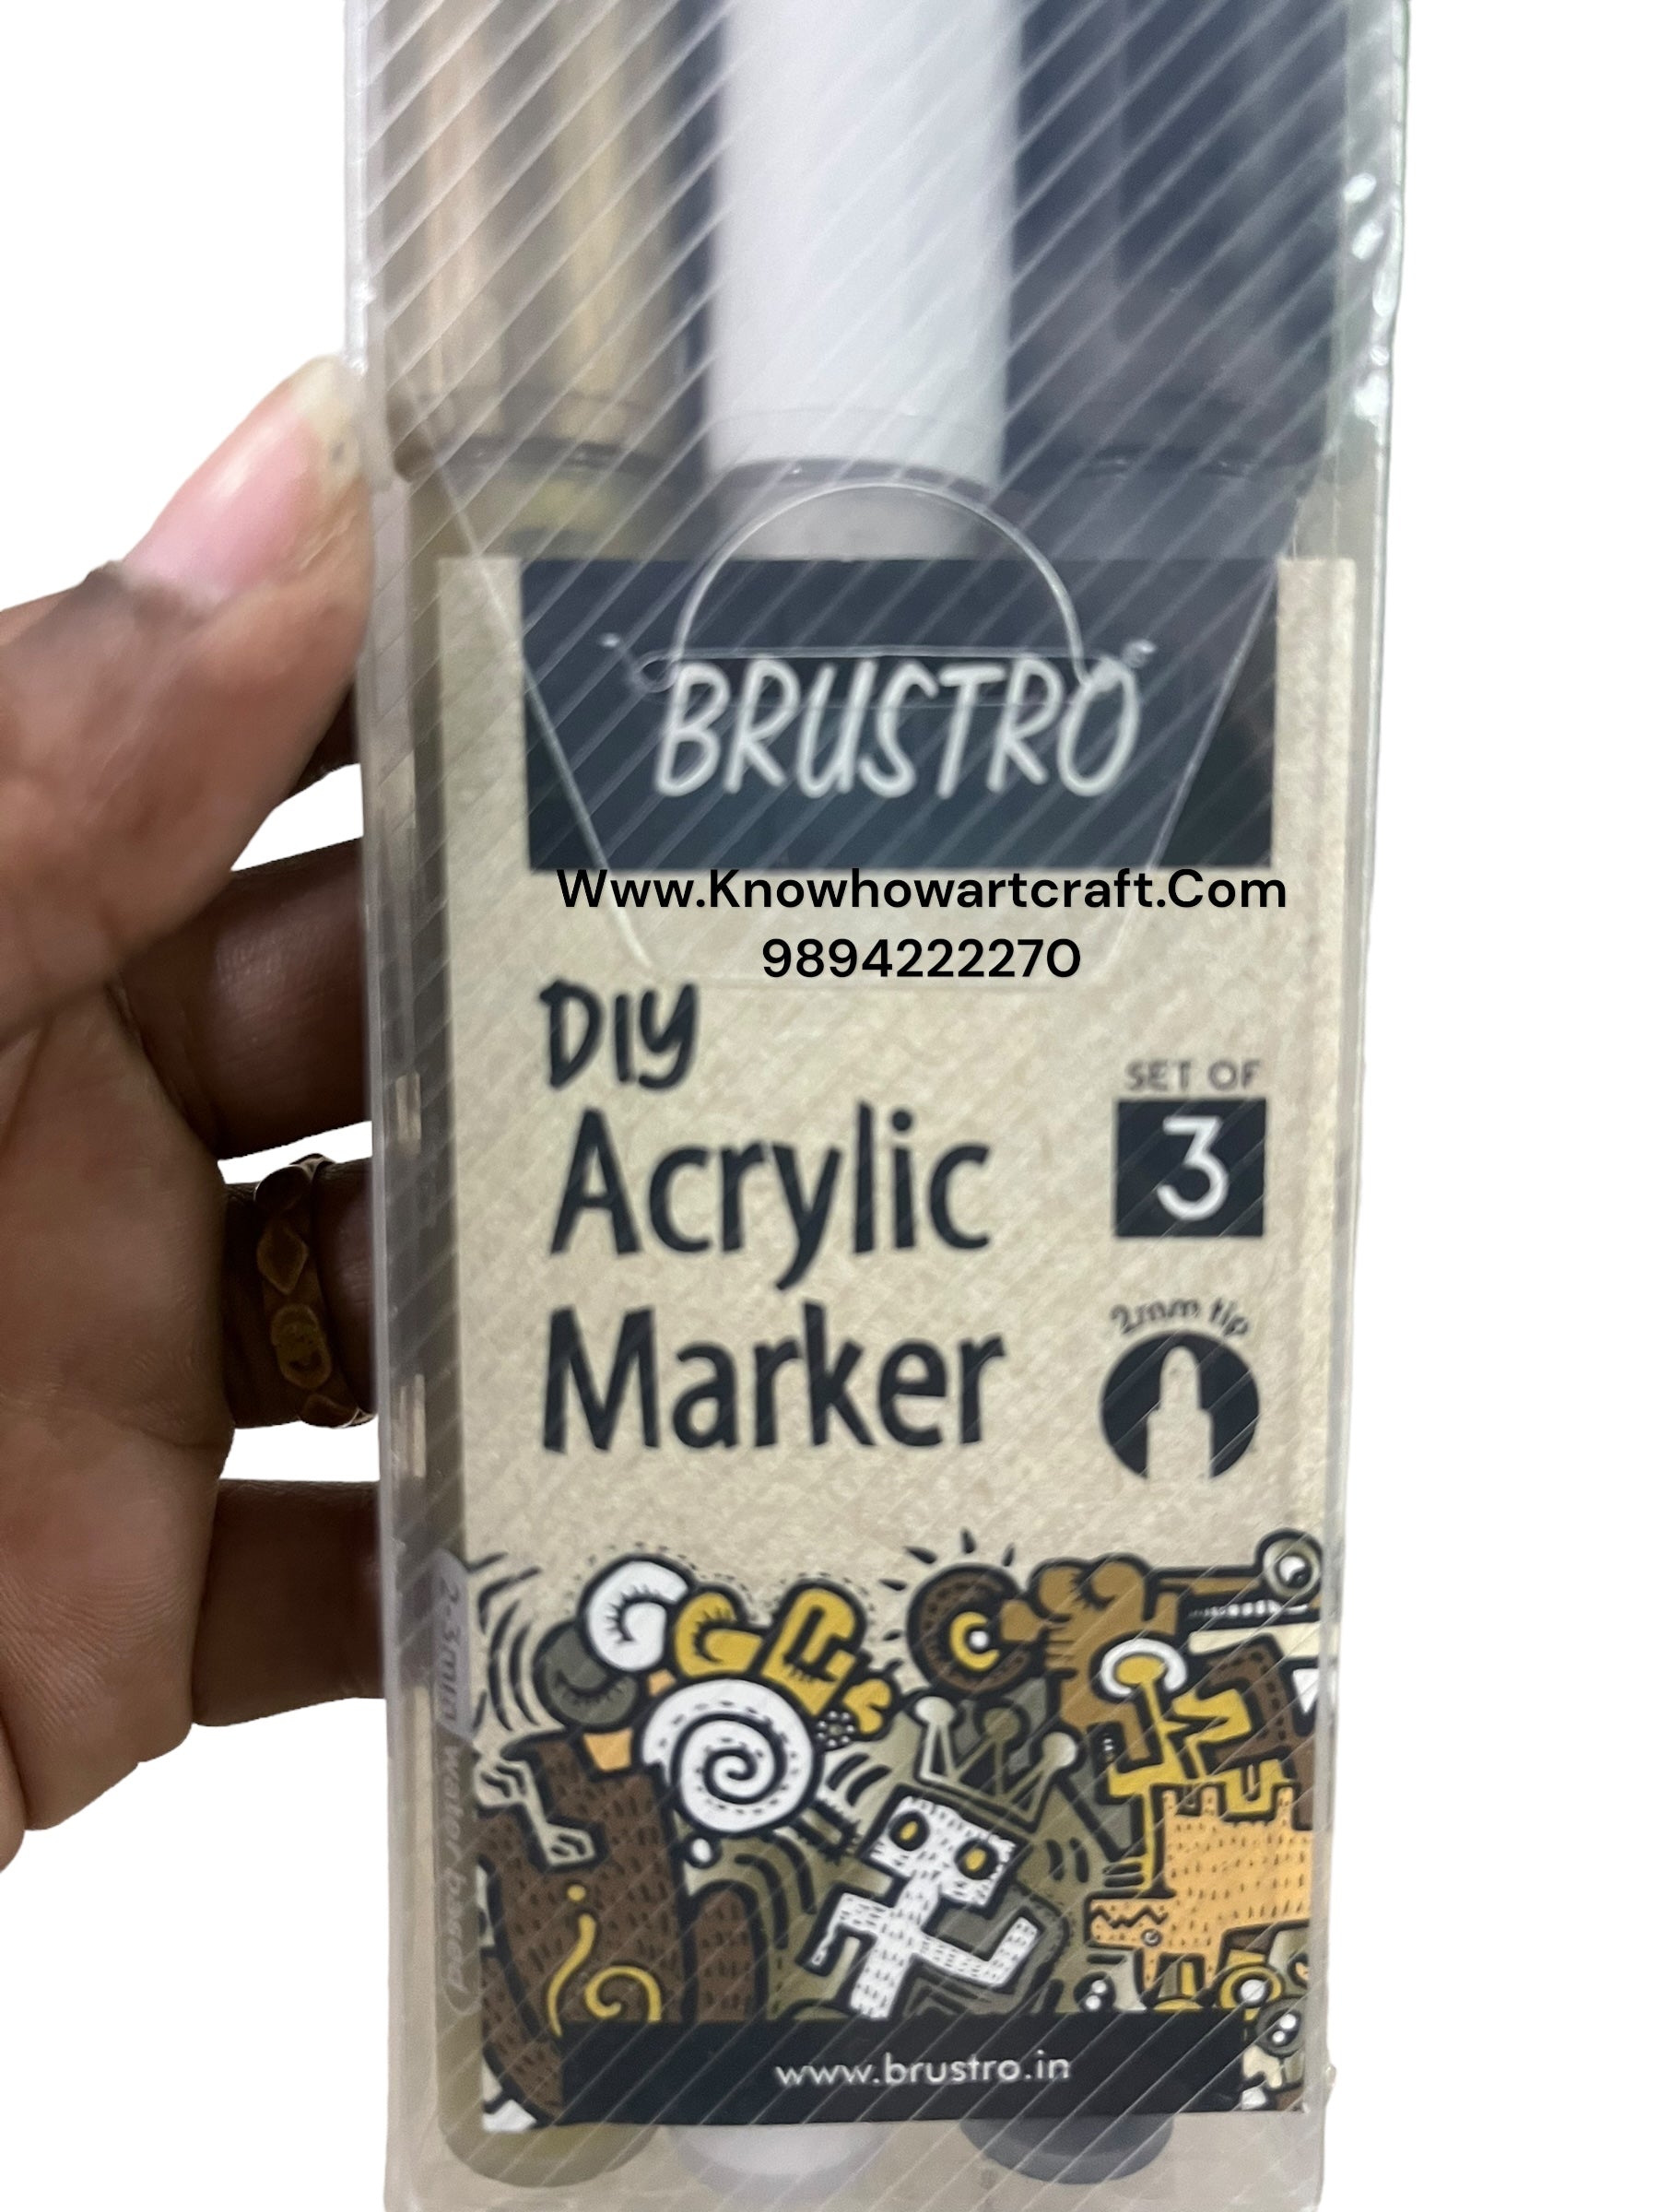 Brustro Diy Acrylic Marker set of 3